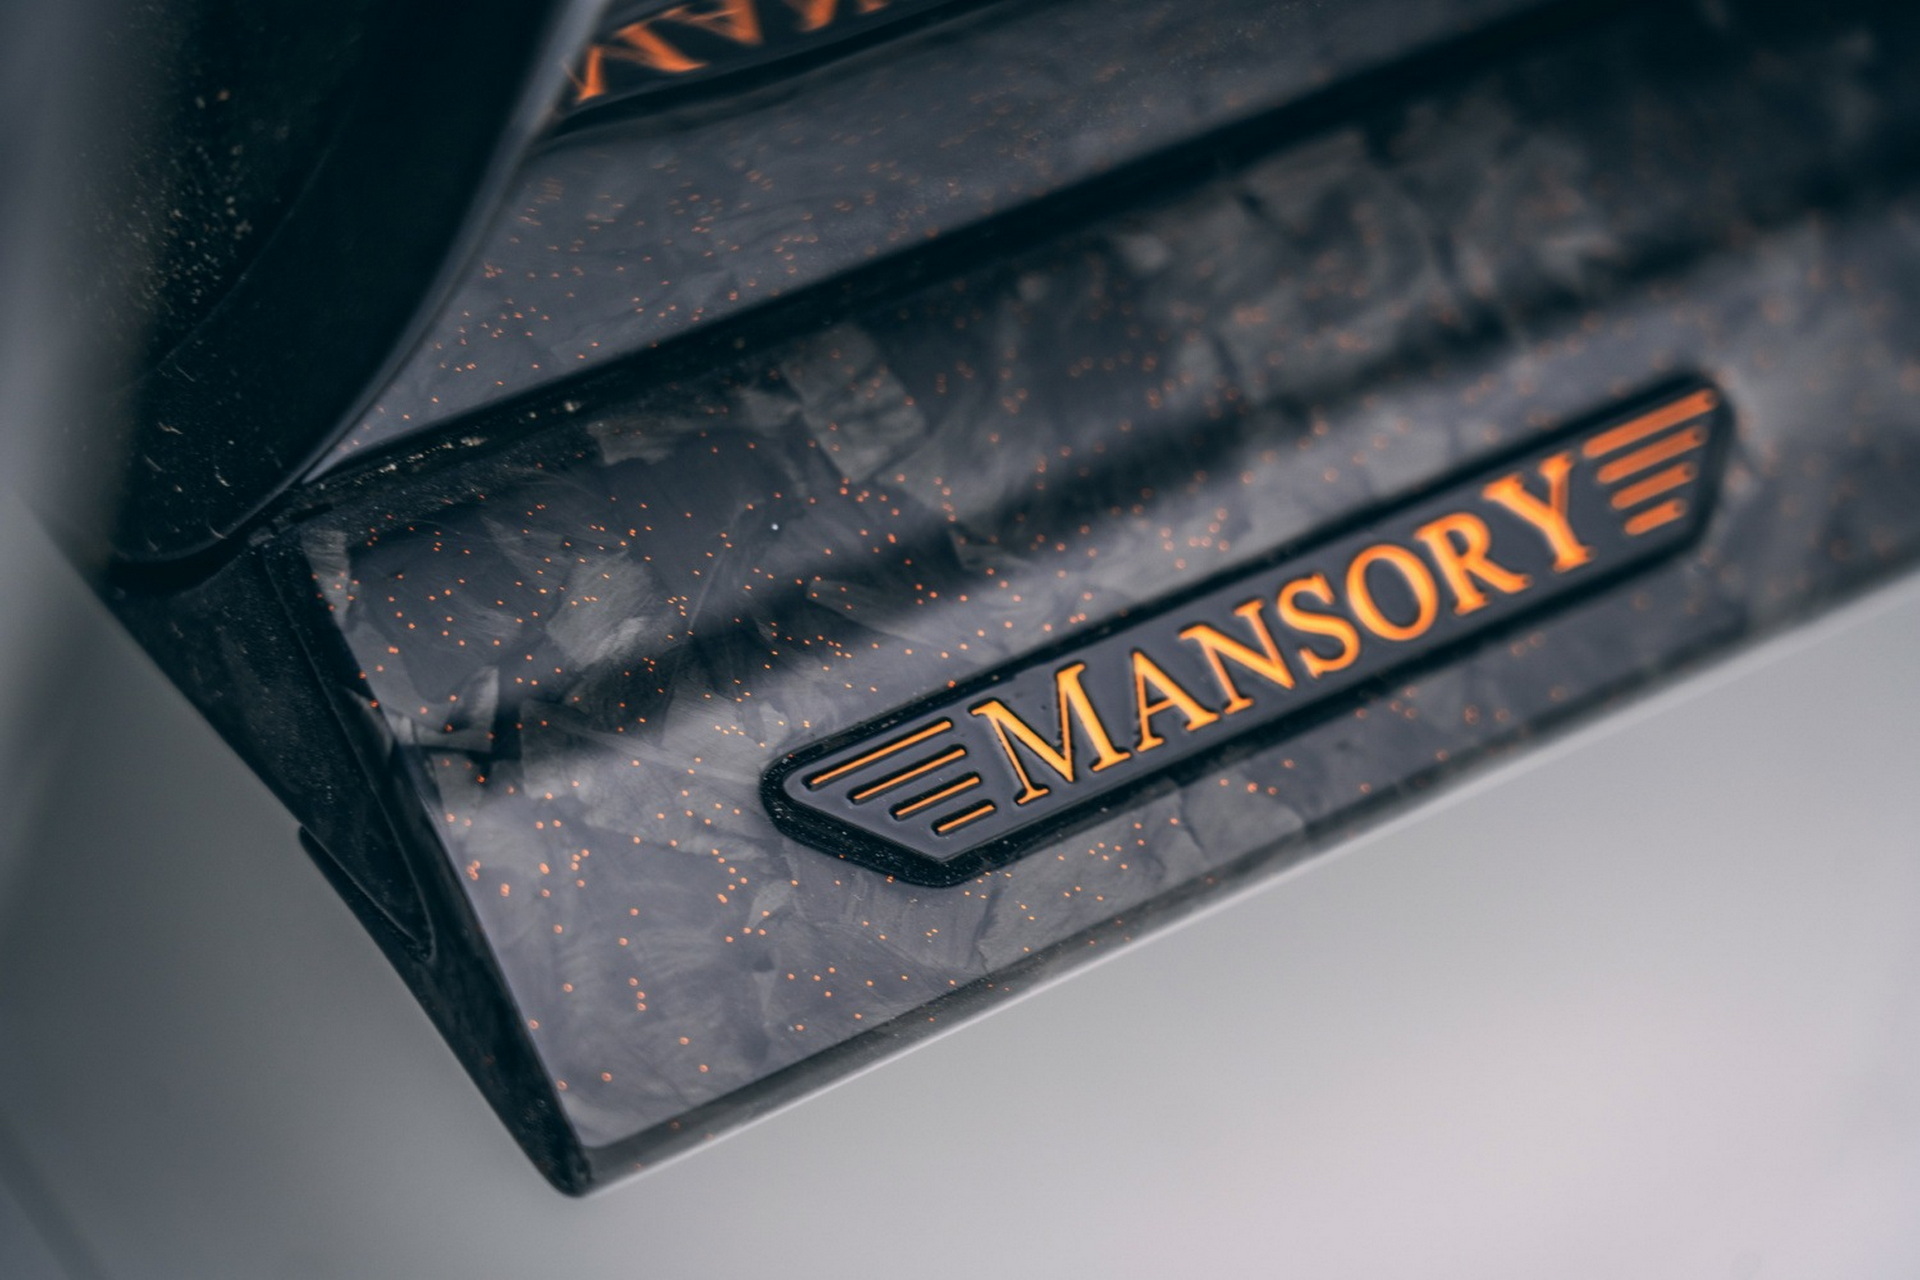 Mansory版劳斯莱斯幻影亮相 售价近100万美元